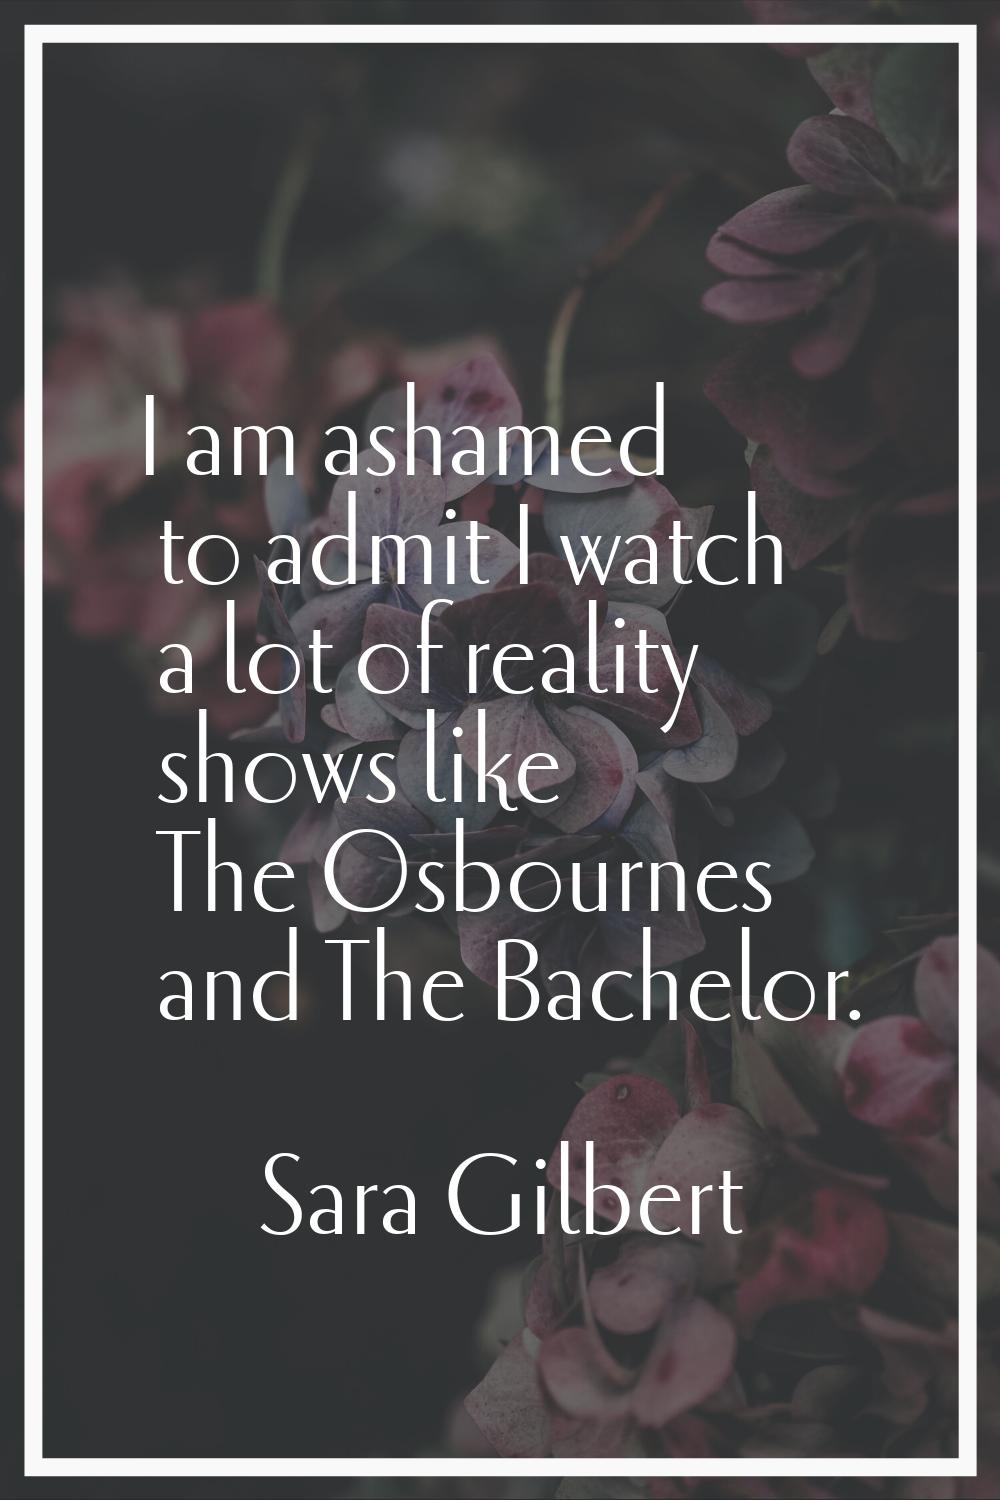 I am ashamed to admit I watch a lot of reality shows like The Osbournes and The Bachelor.